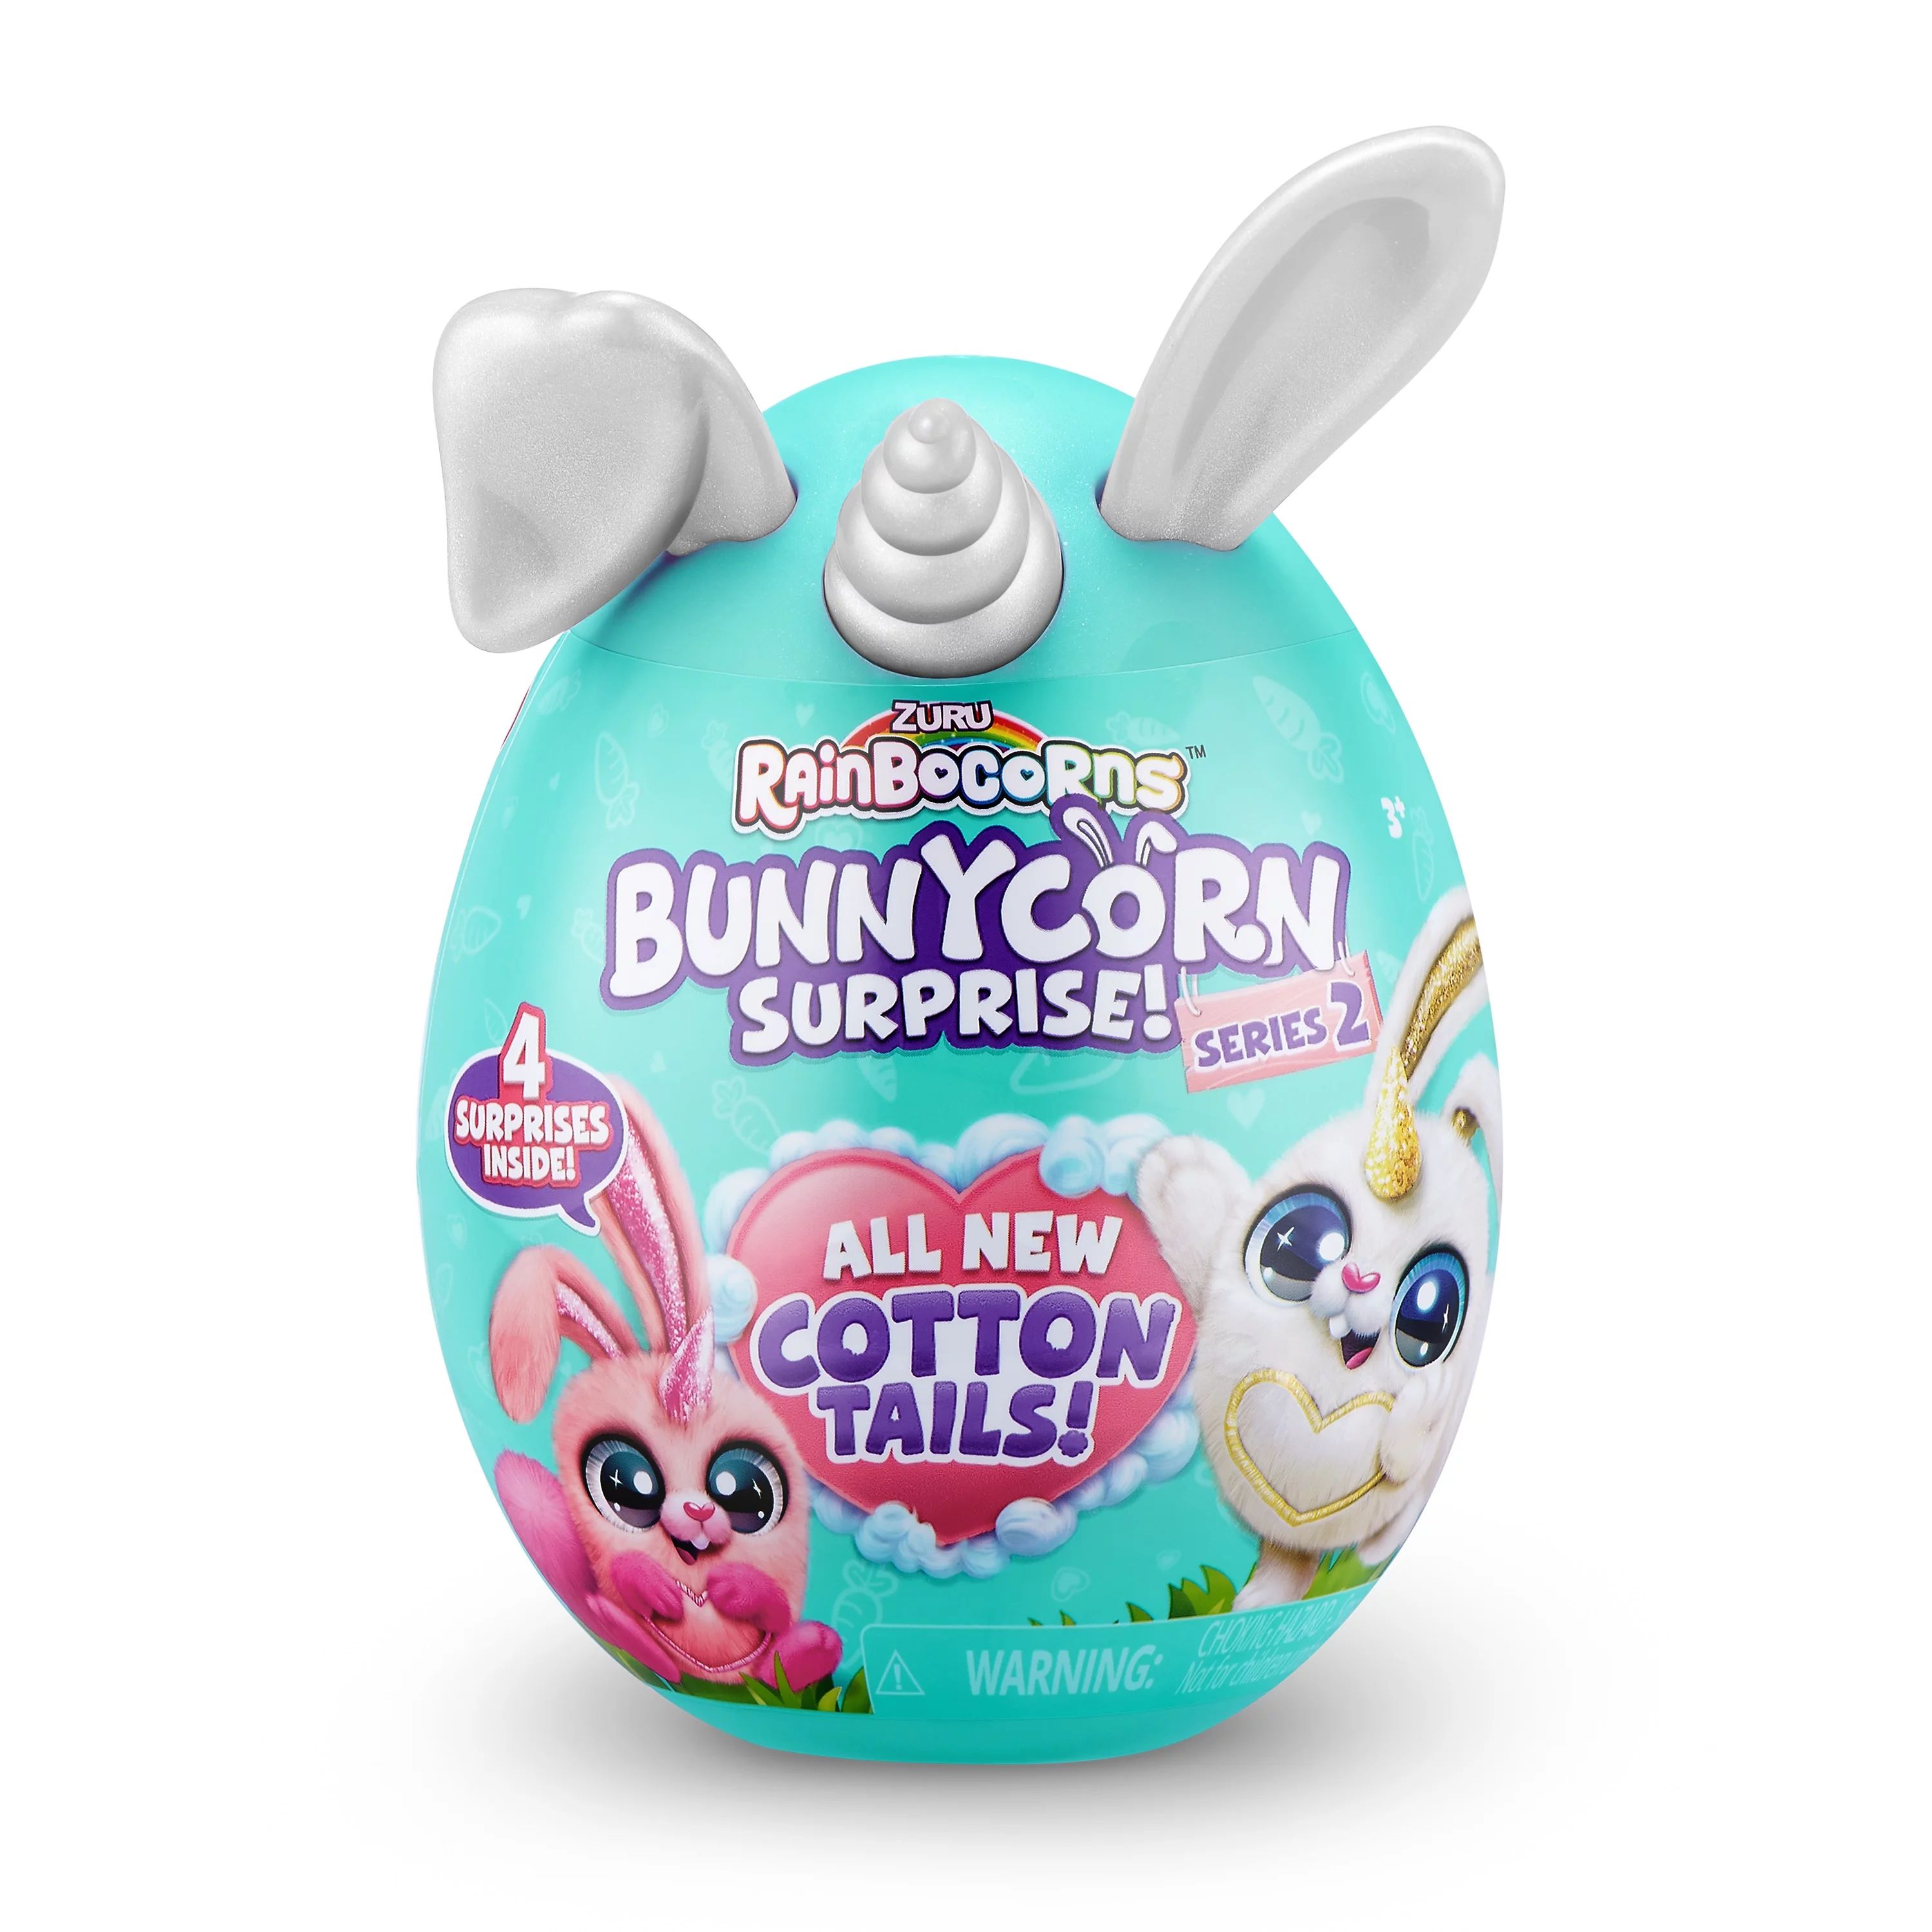 Rainbocorns Bunnycorn Surprise Series 2 Plush Toy by ZURU | Walmart (US)